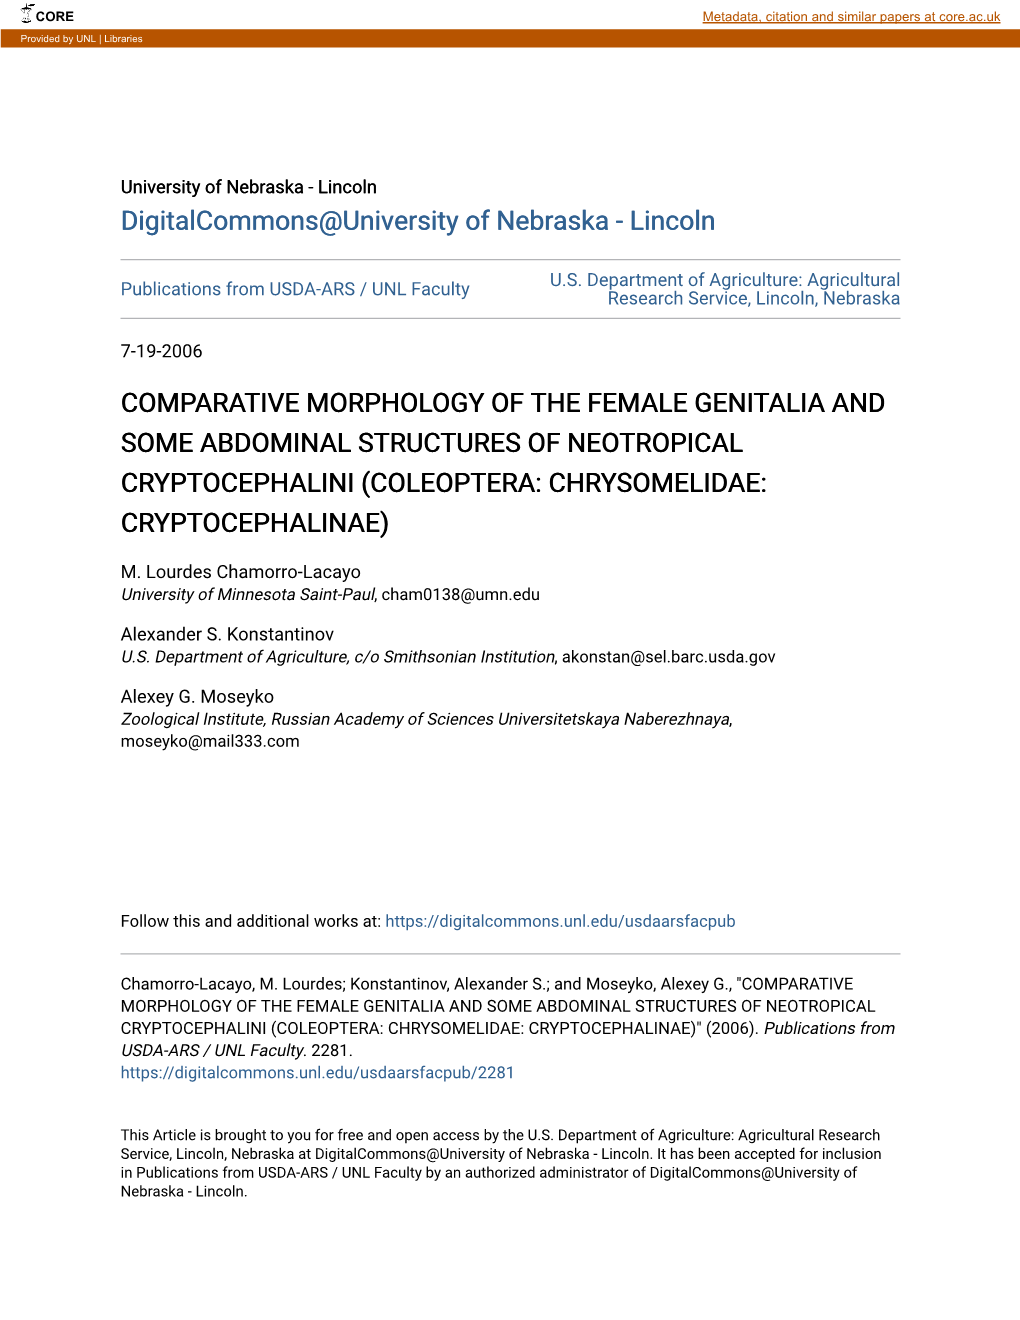 Comparative Morphology of the Female Genitalia and Some Abdominal Structures of Neotropical Cryptocephalini (Coleoptera: Chrysomelidae: Cryptocephalinae)